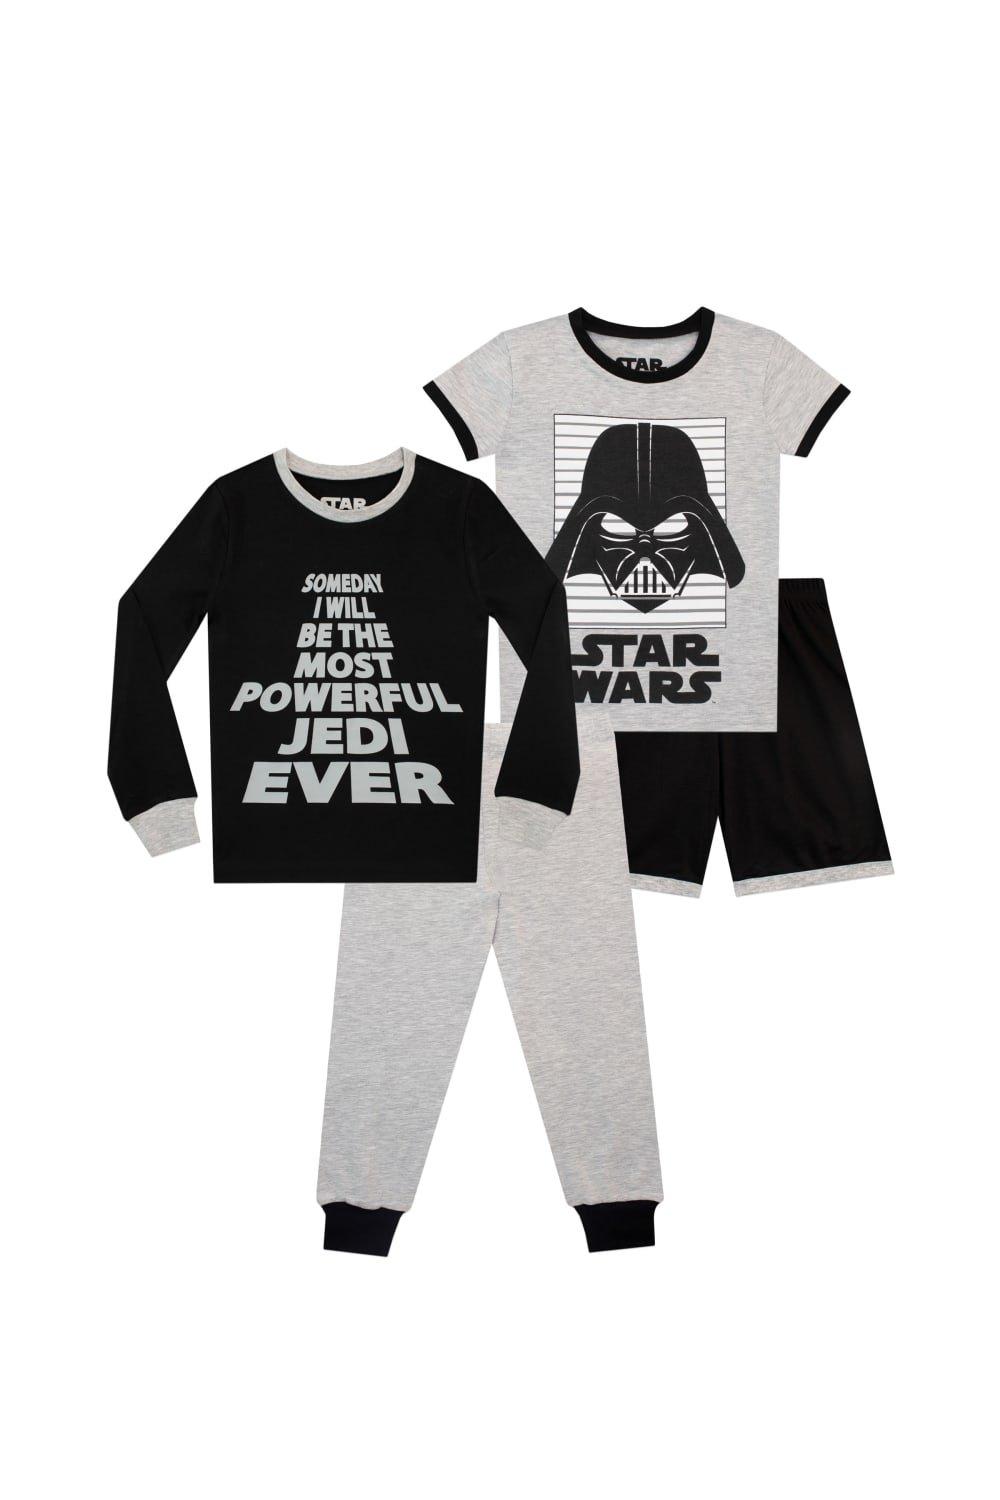 Darth Vader Pyjamas 2 Pack